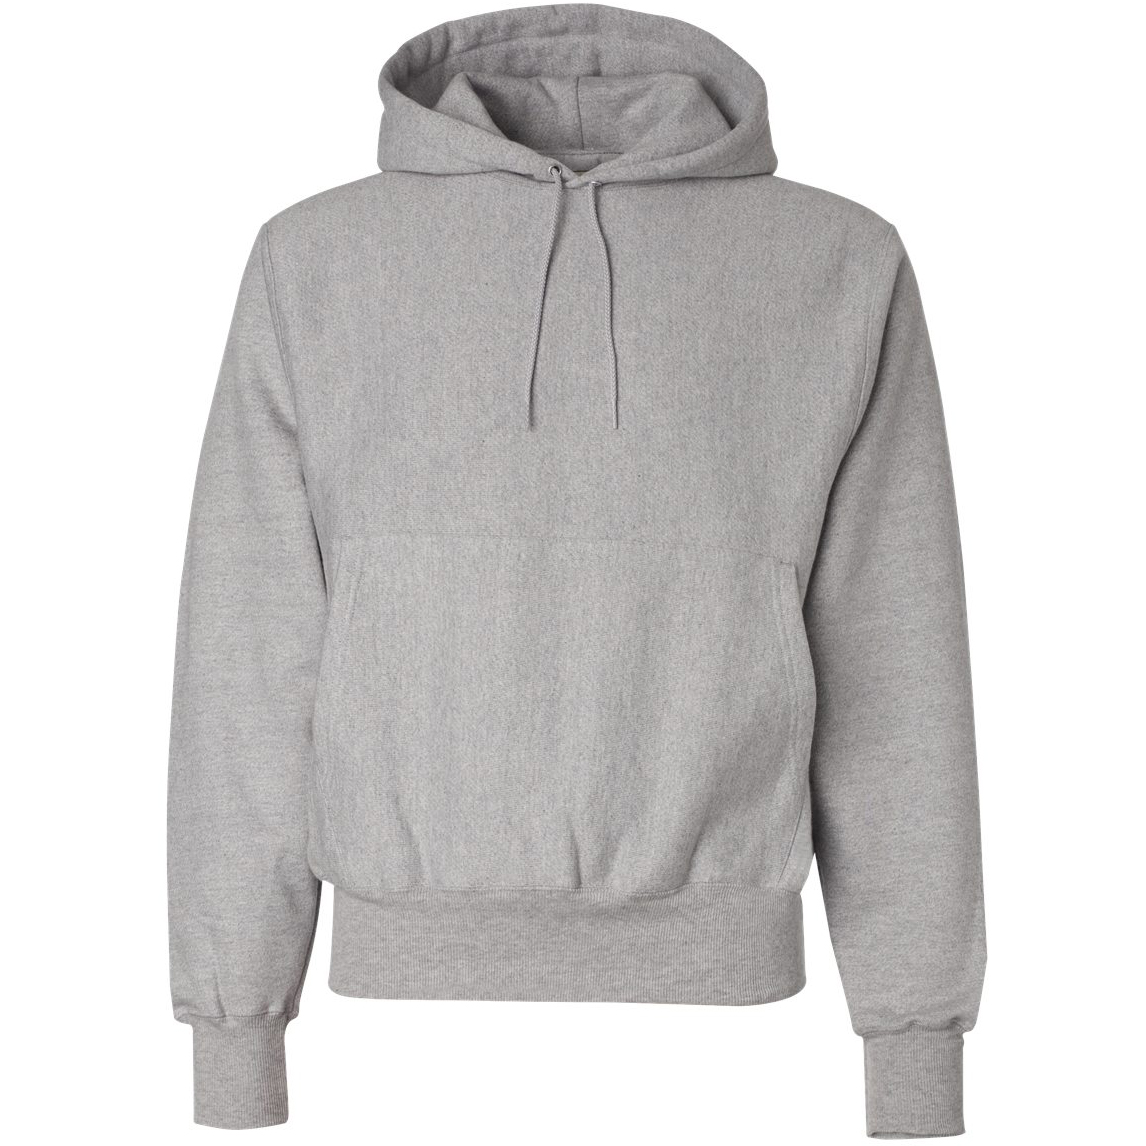 oxford gray champion hoodie